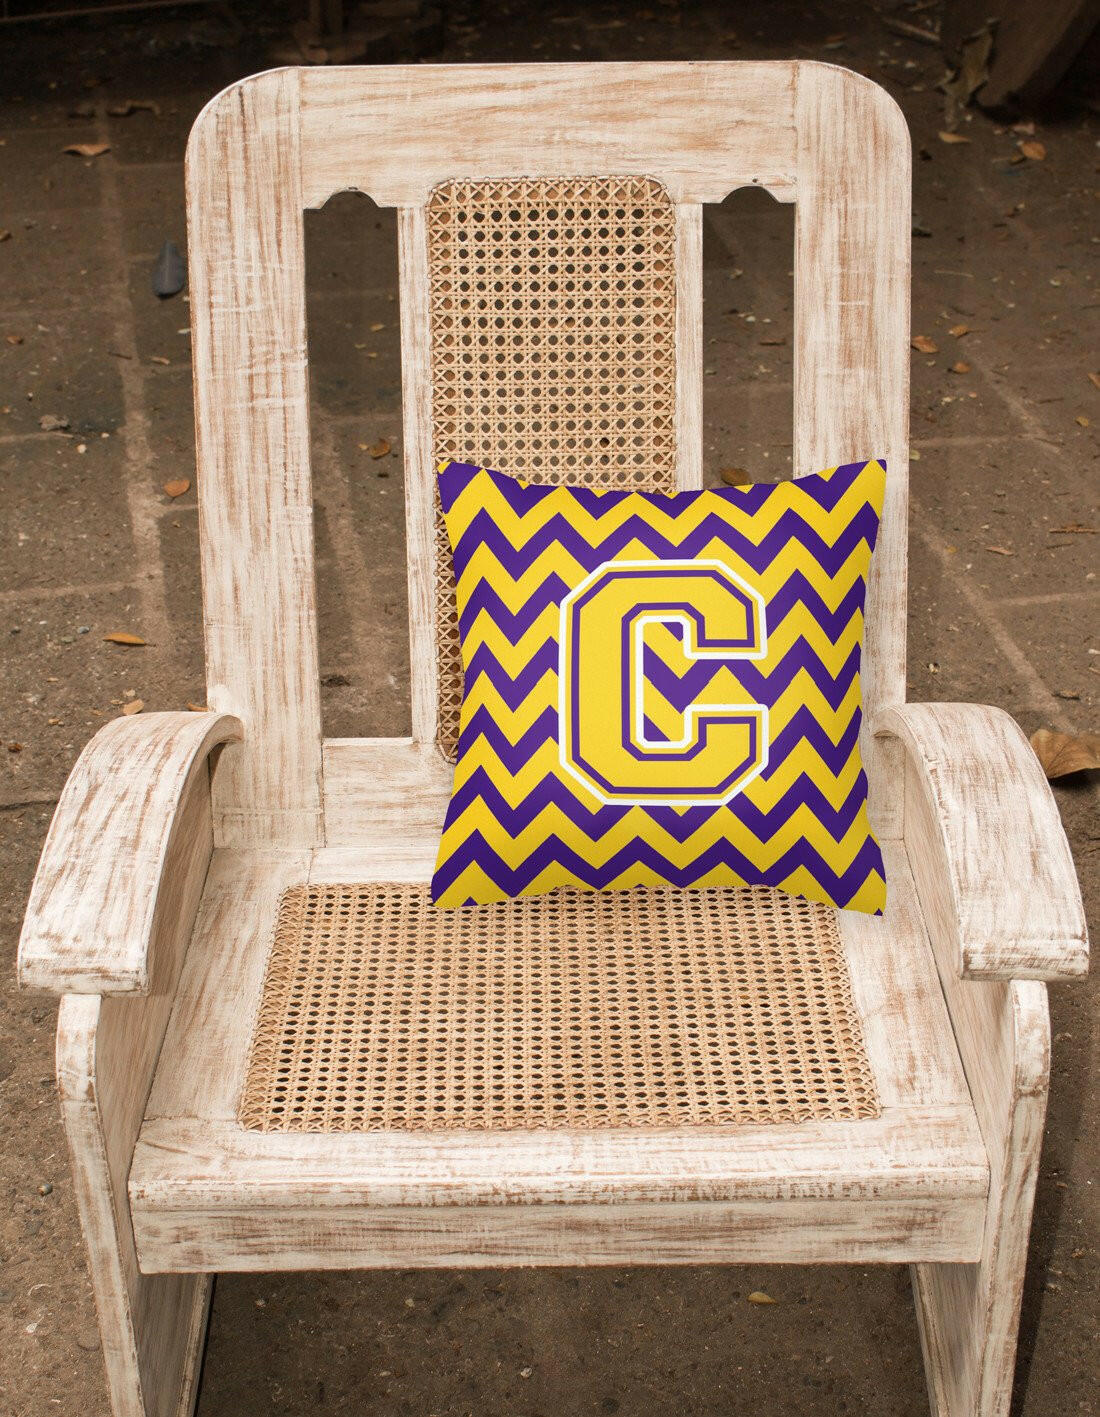 Letter C Chevron Purple and Gold  Fabric Decorative Pillow CJ1041-CPW1414 - the-store.com